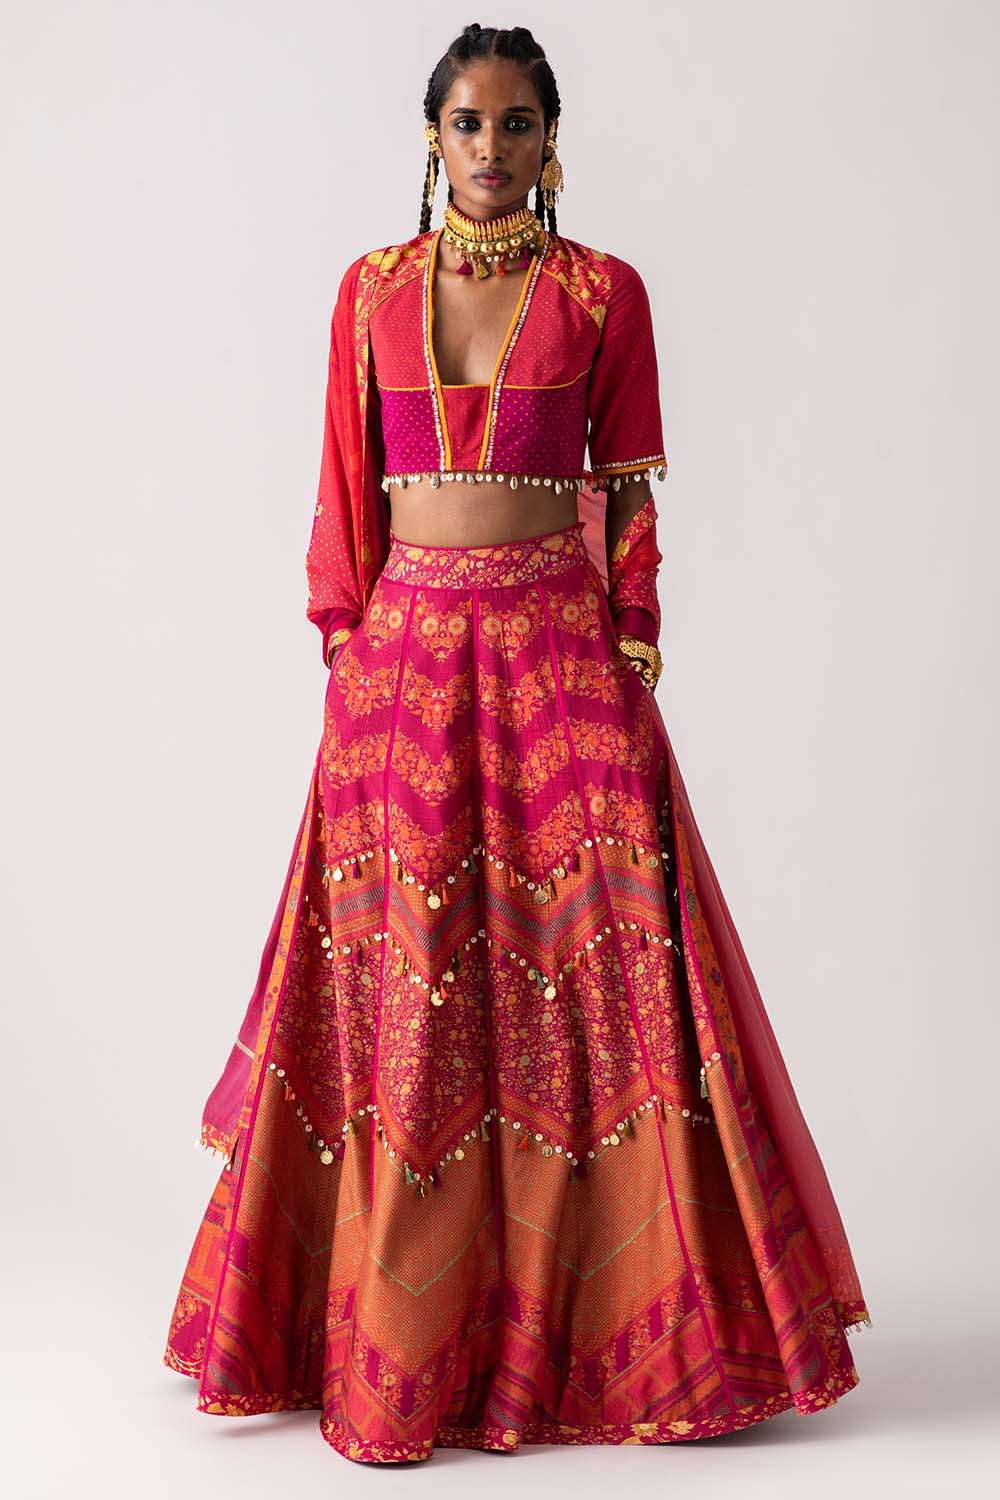 Yankita Kapoor Designer Long Top Pink Lehenga Choli for Women. - Etsy  Australia